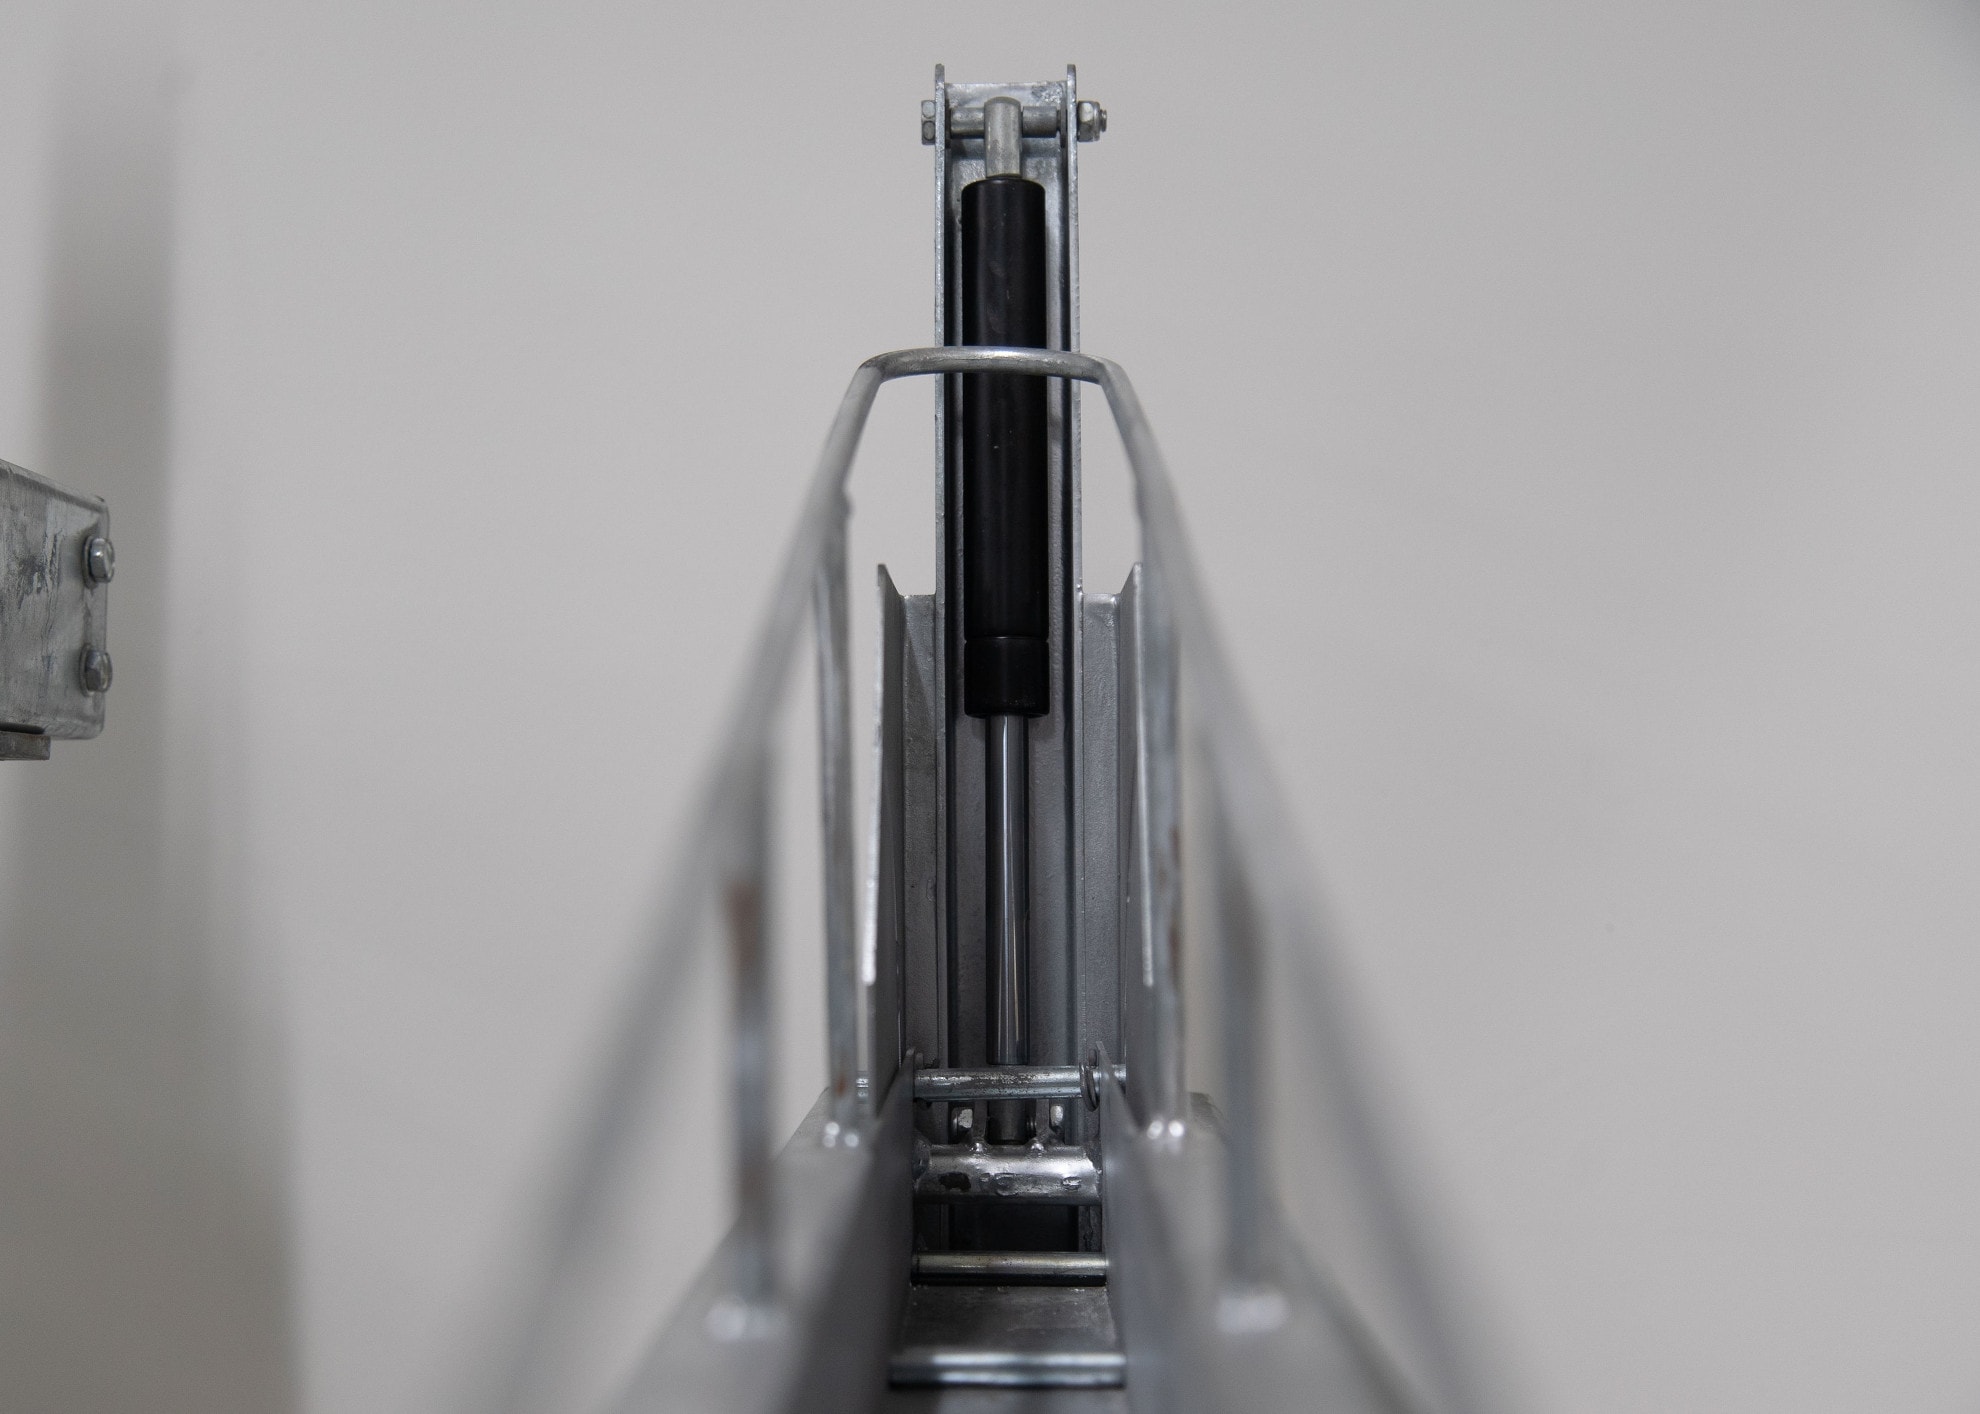 Two Tier Electric Bike Rack from Bike Safe Branding Detail